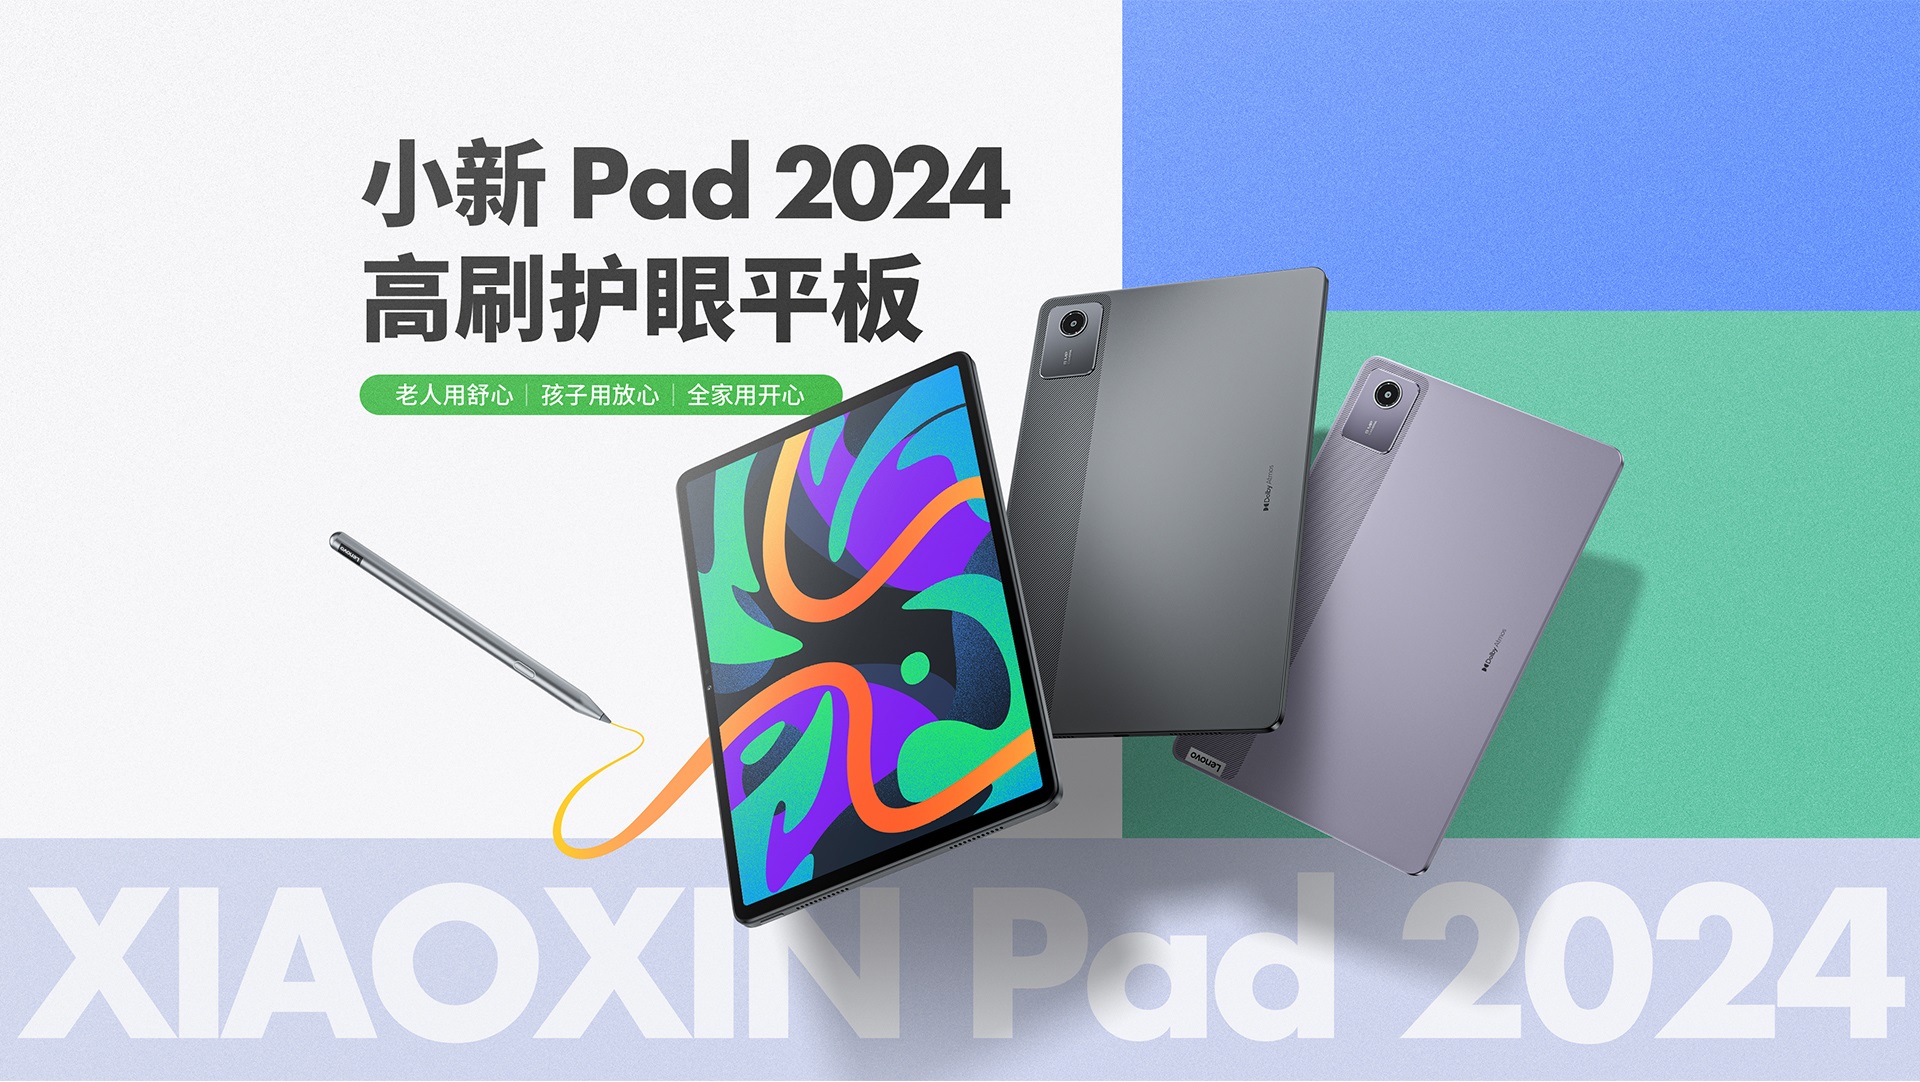 Lenovo Xiaoxin Pad 2024 tablet